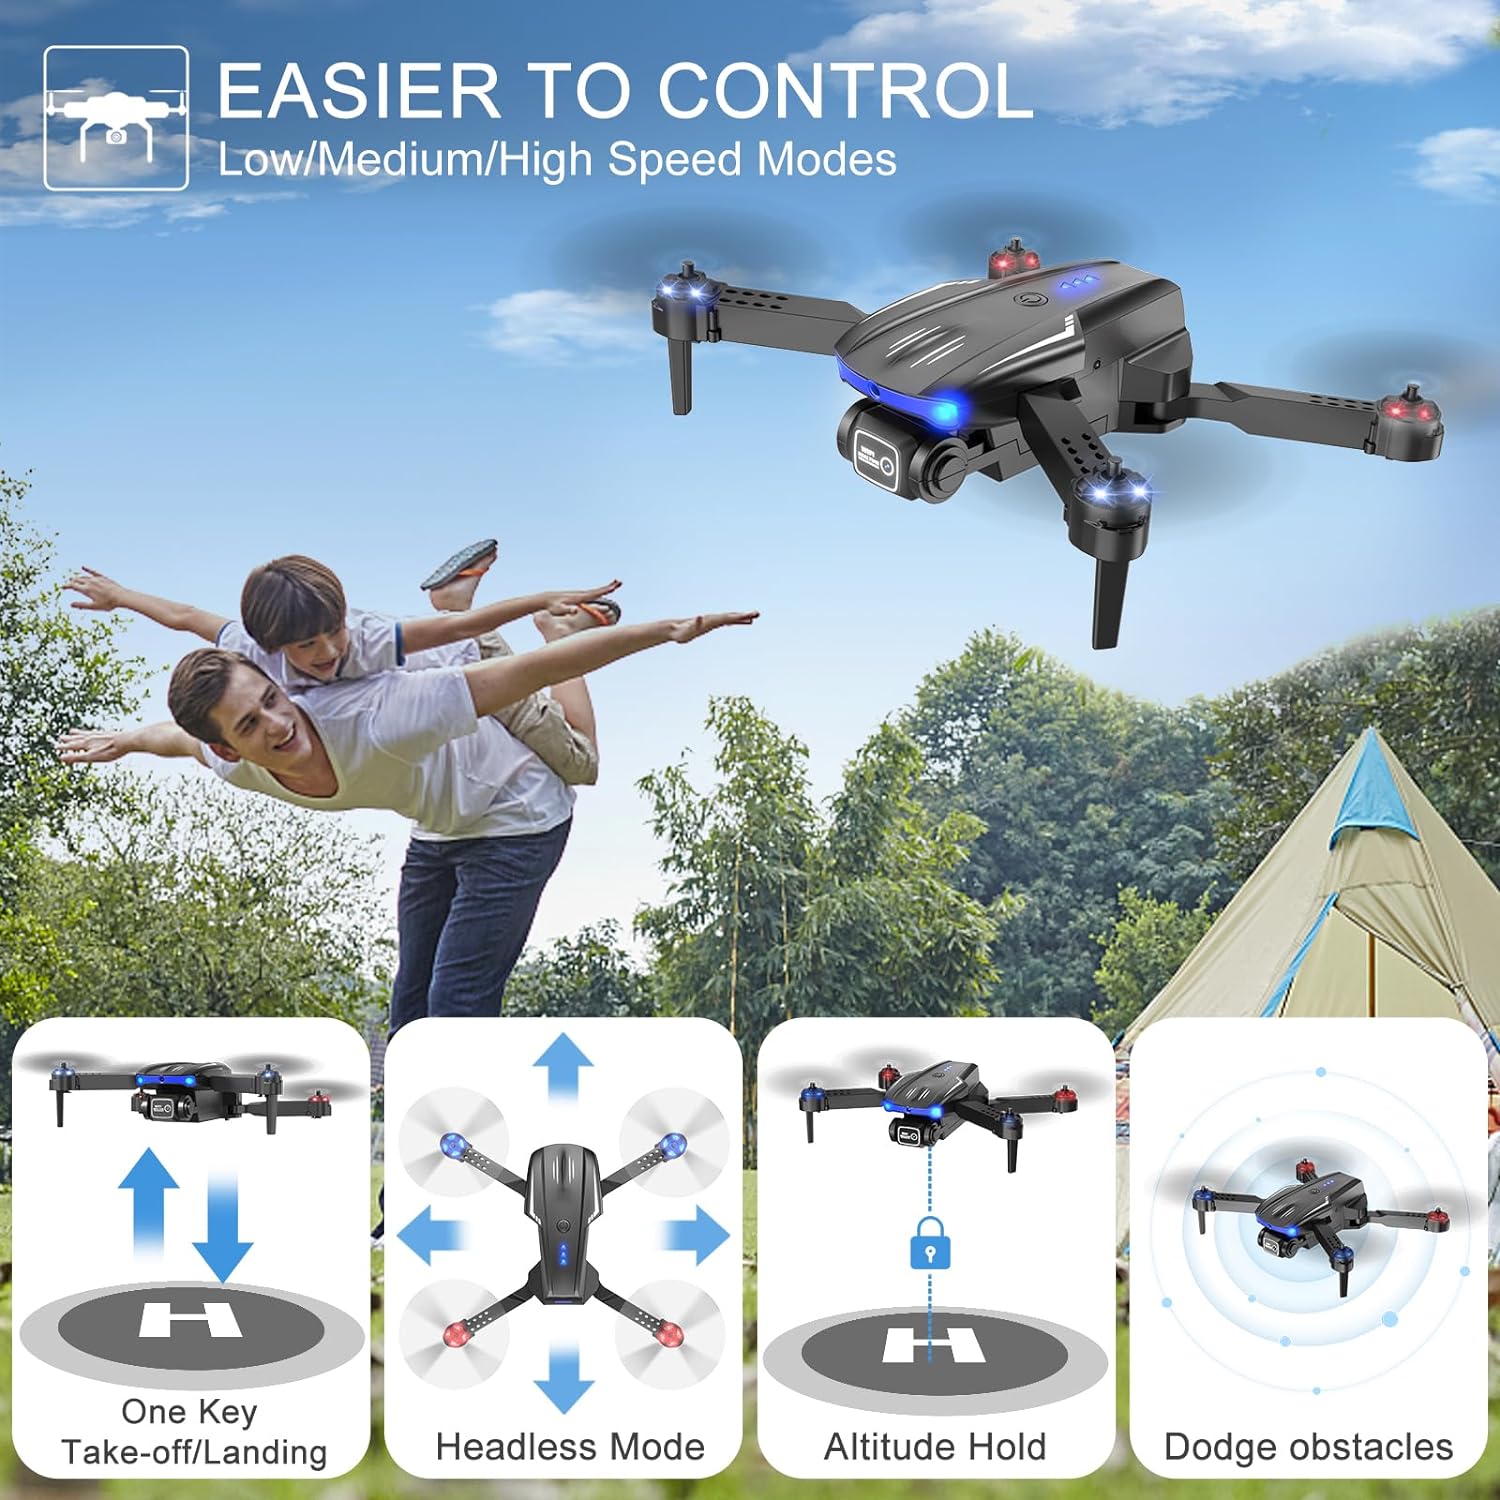 X-shop LDG006 Drone, EASIER TO CONTROL LowlMedium/High Speed